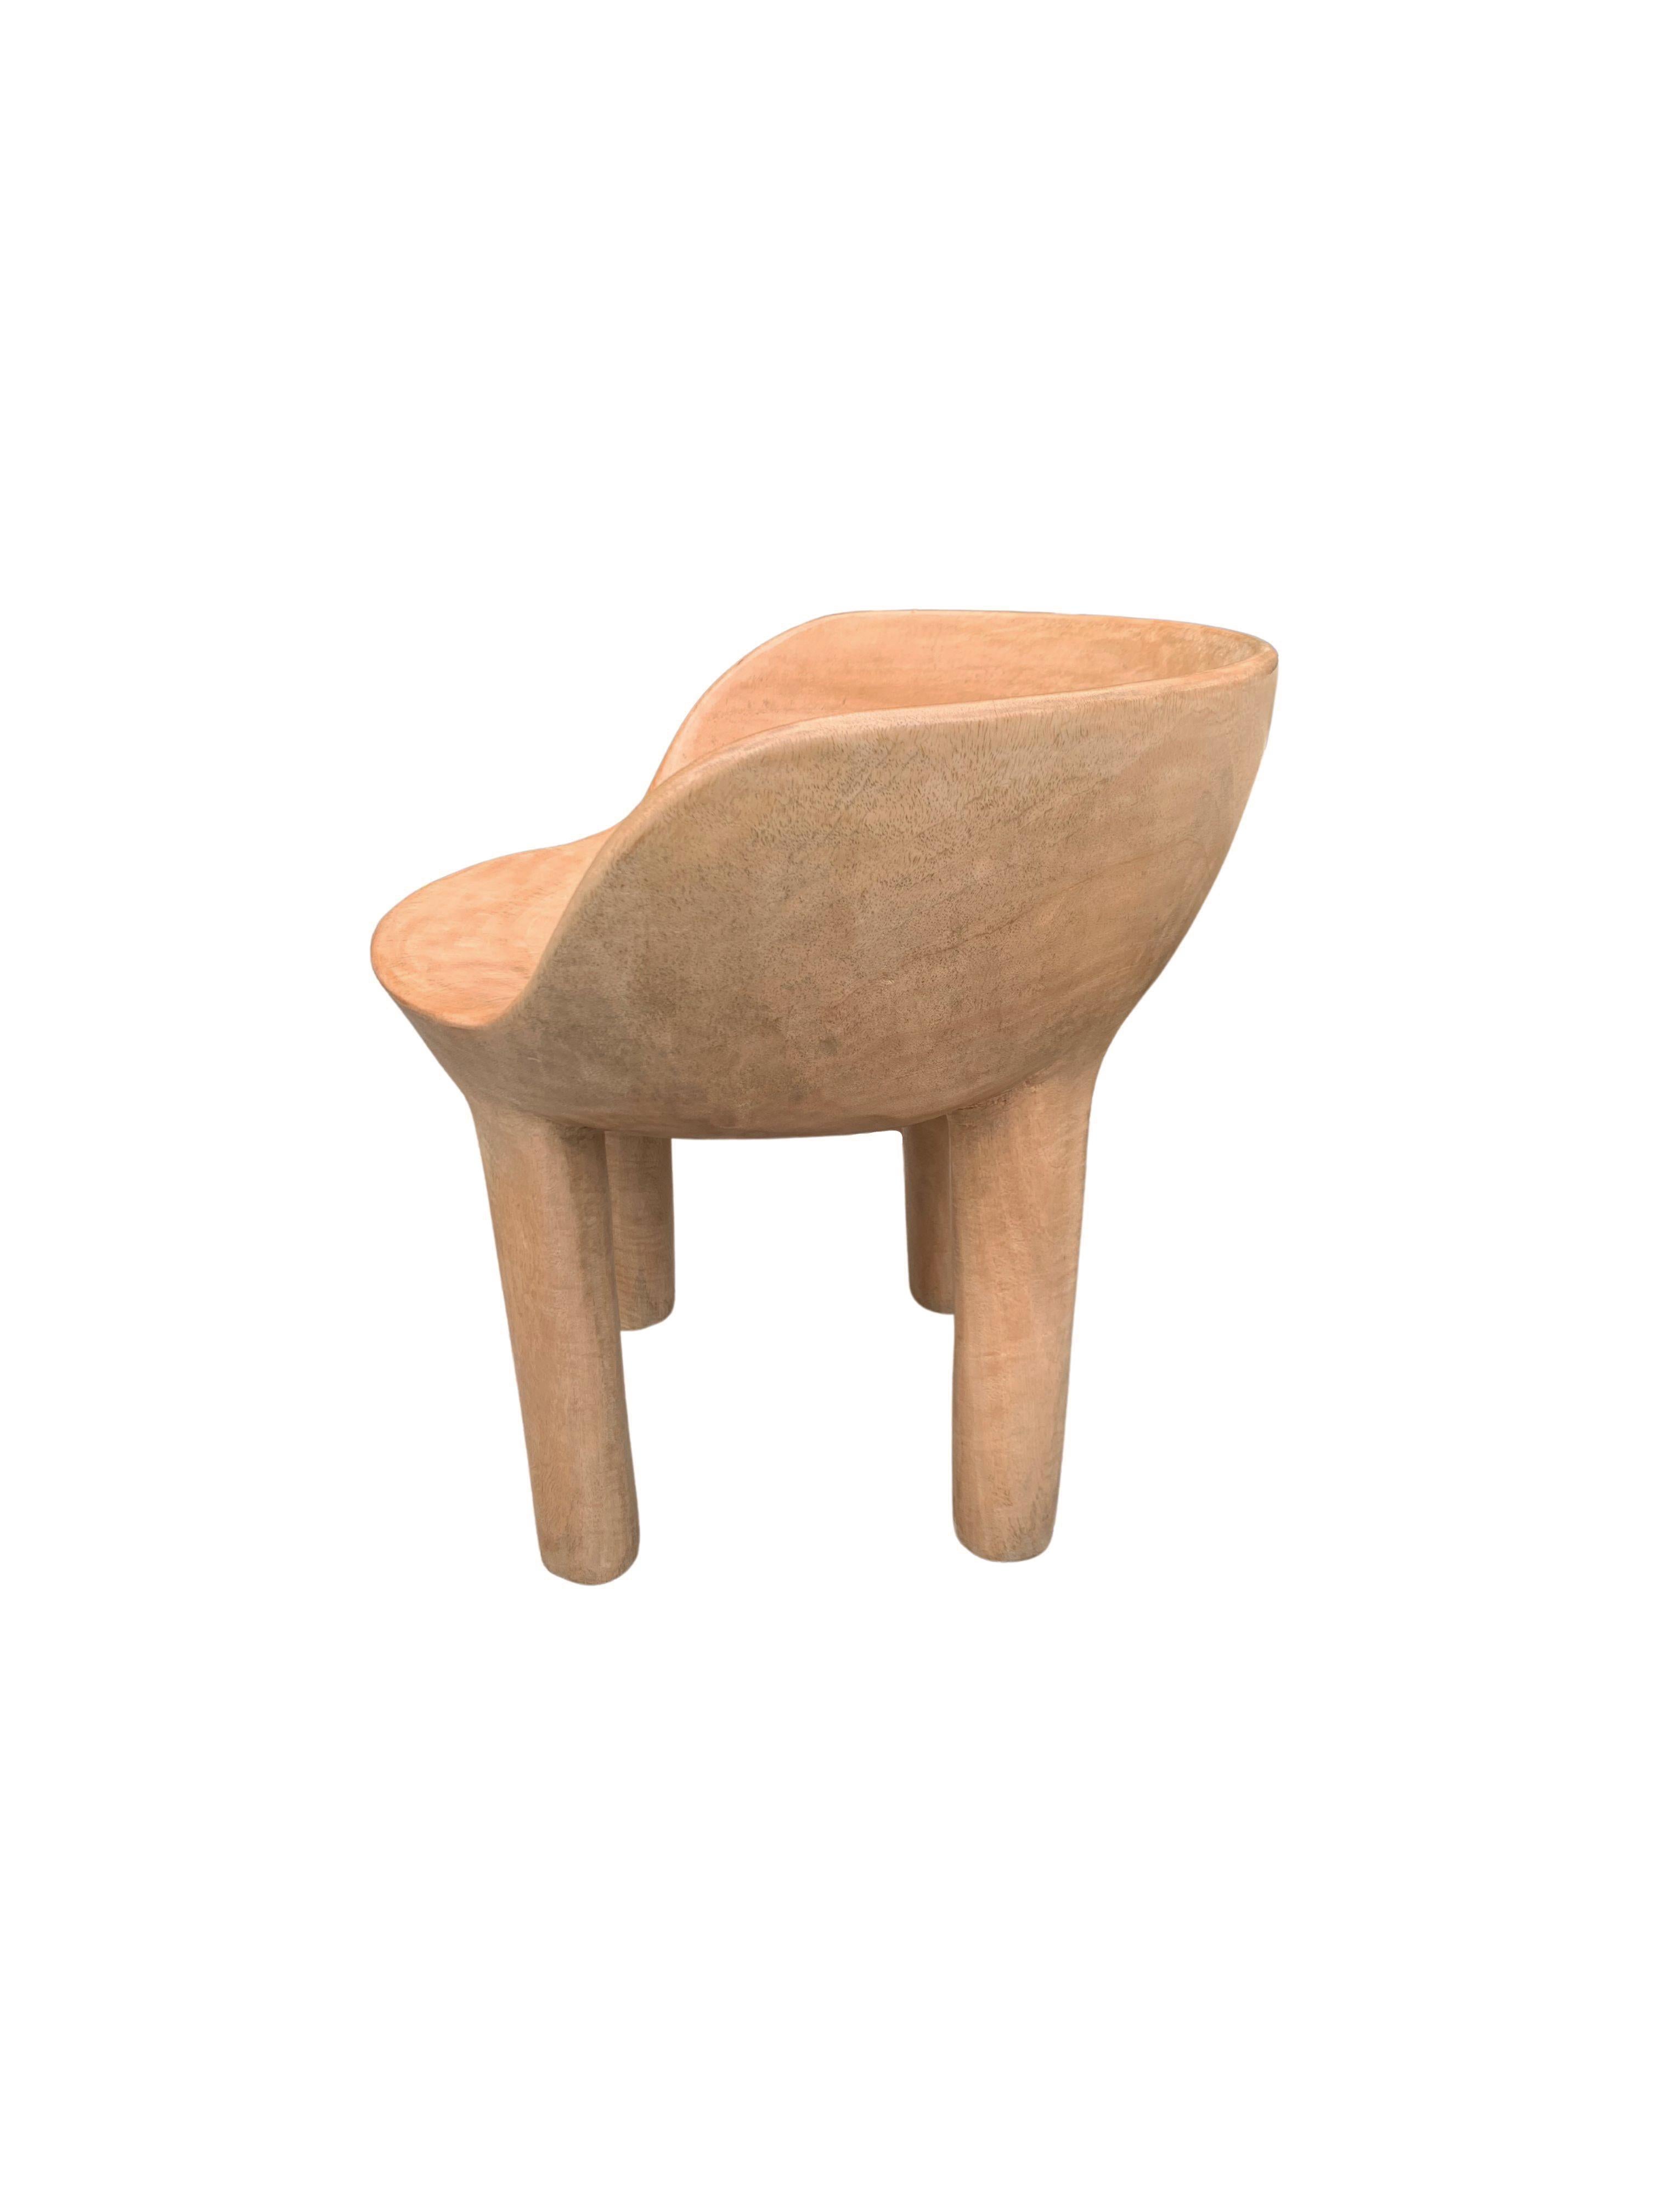 Indonesian Sculptural Mango Wood Chair Modern Organic For Sale